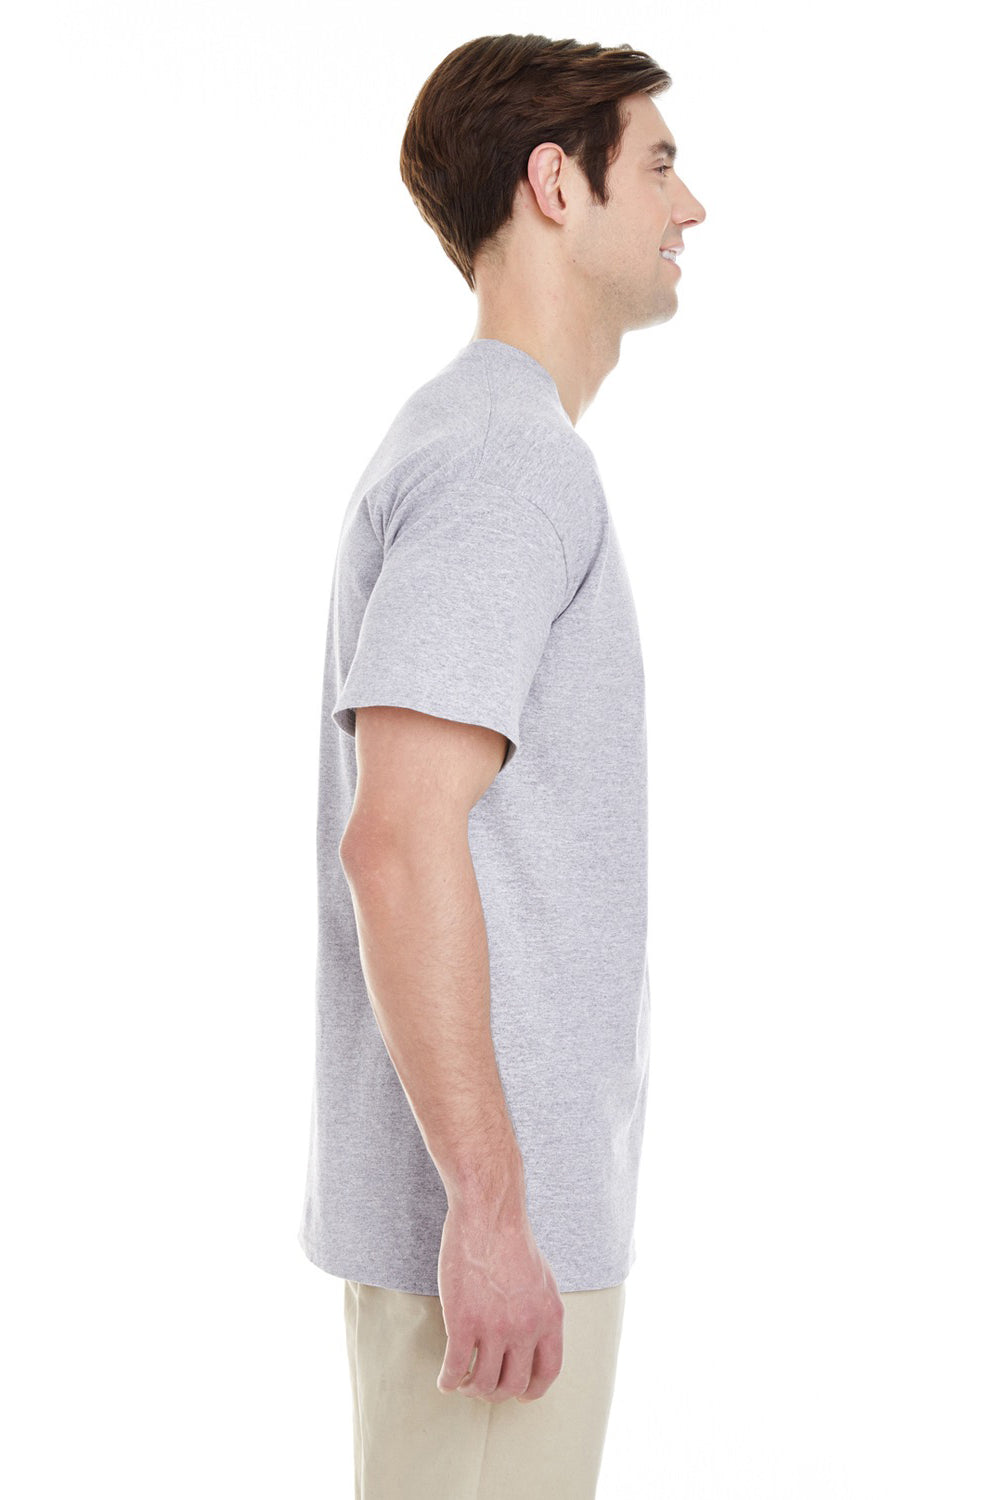 Gildan G530 Mens Short Sleeve Crewneck T-Shirt w/ Pocket Grey Side